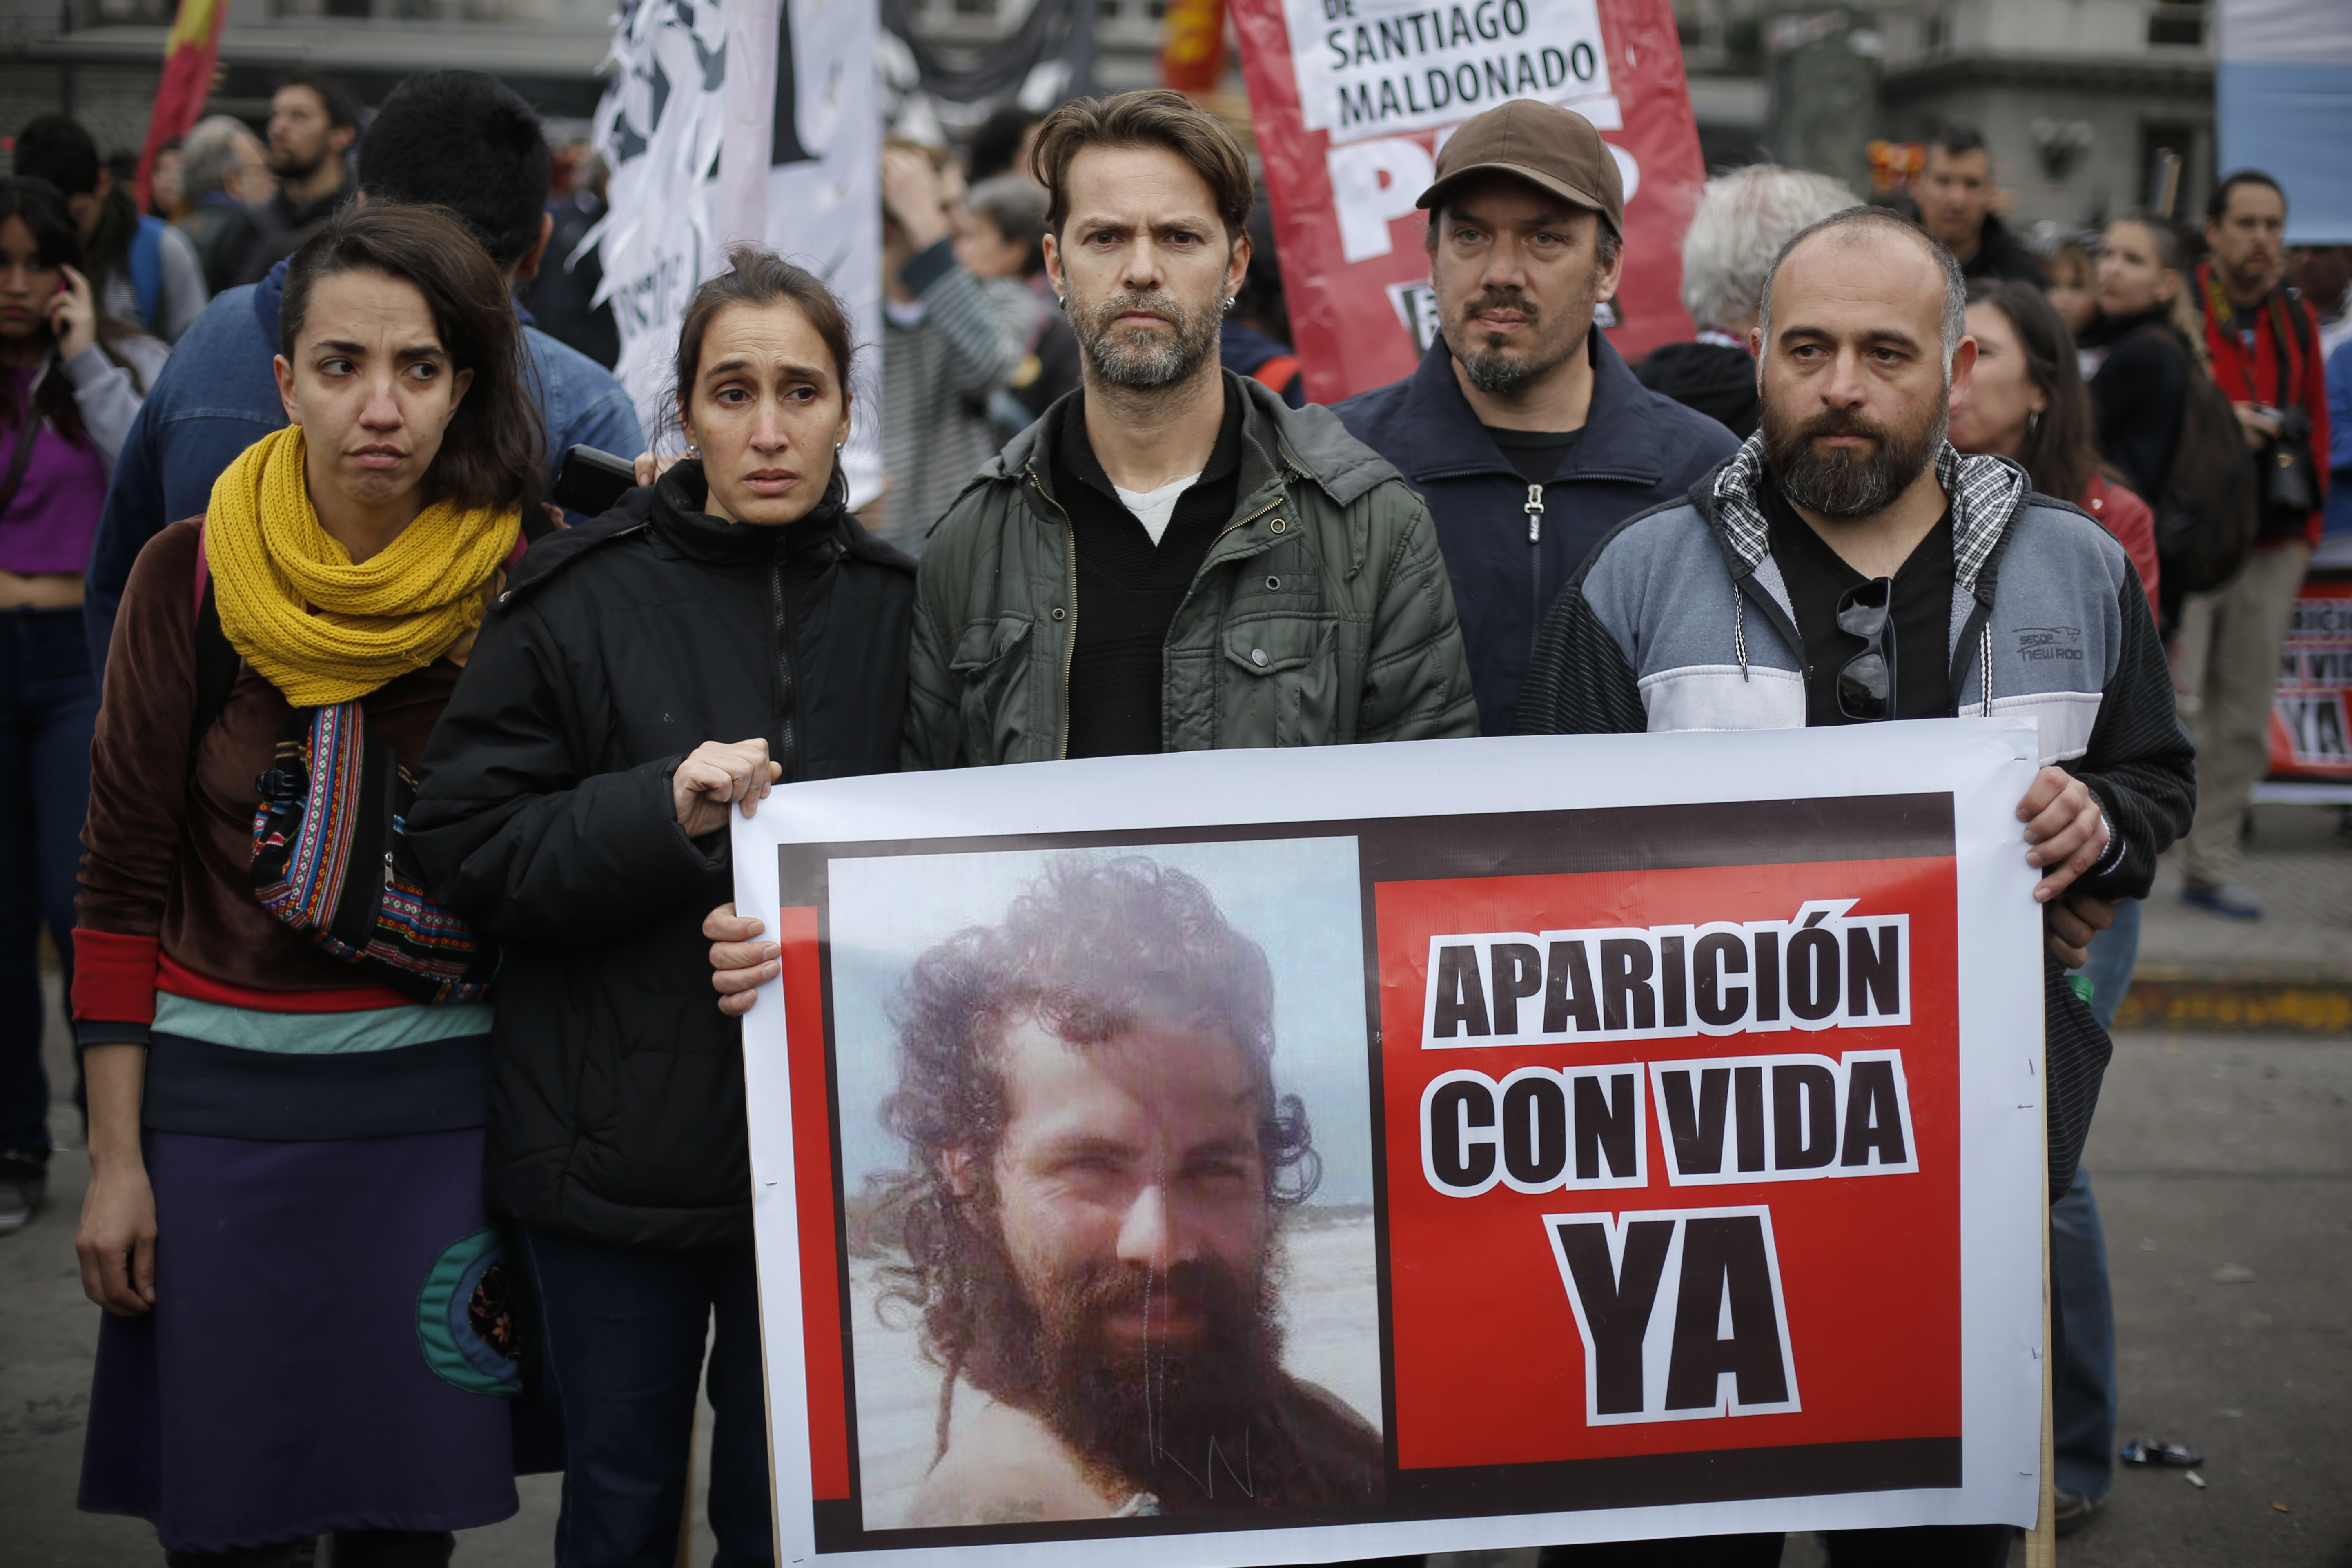 Relatives of Santiago Maldonado, including his brother German, center, and activists, hold photos of Maldonado and the Spanish message 